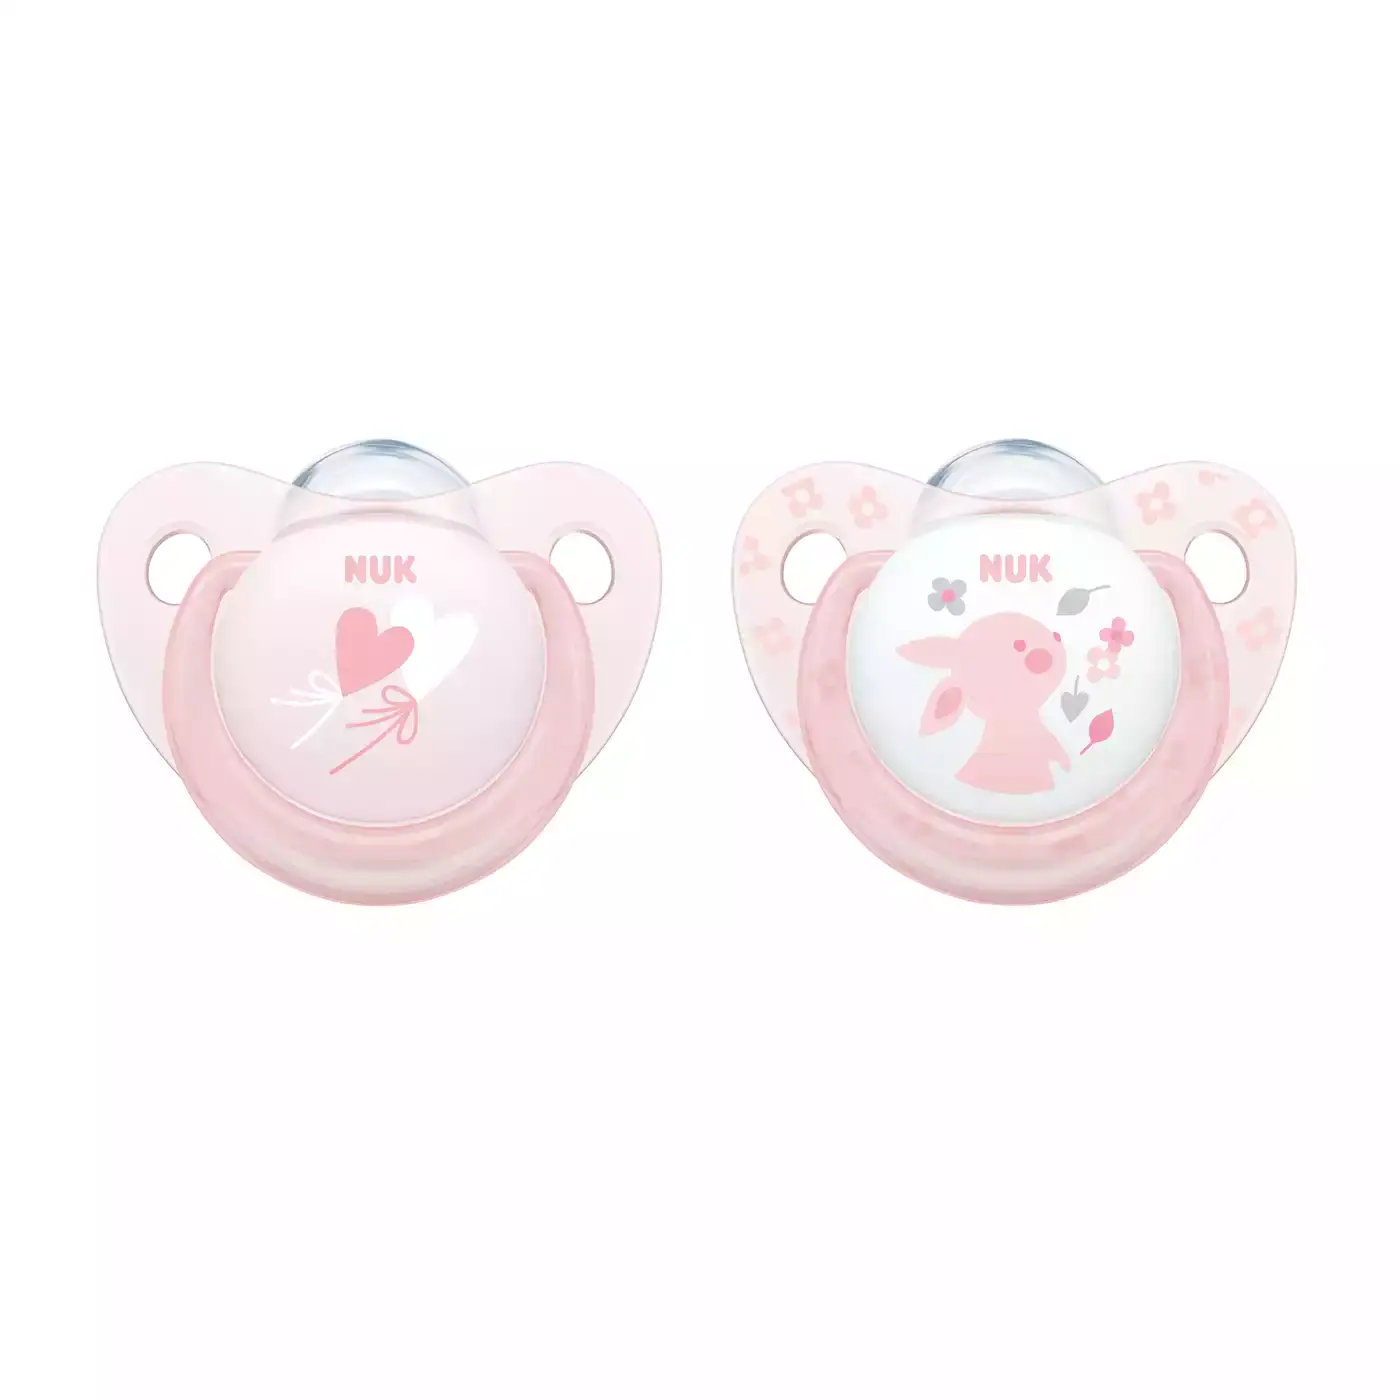 Baby Rose Trendline Silikon-Schnuller 6-18 Monate NUK Beige Pink Transparent Rosa Weiß 2000571029507 1